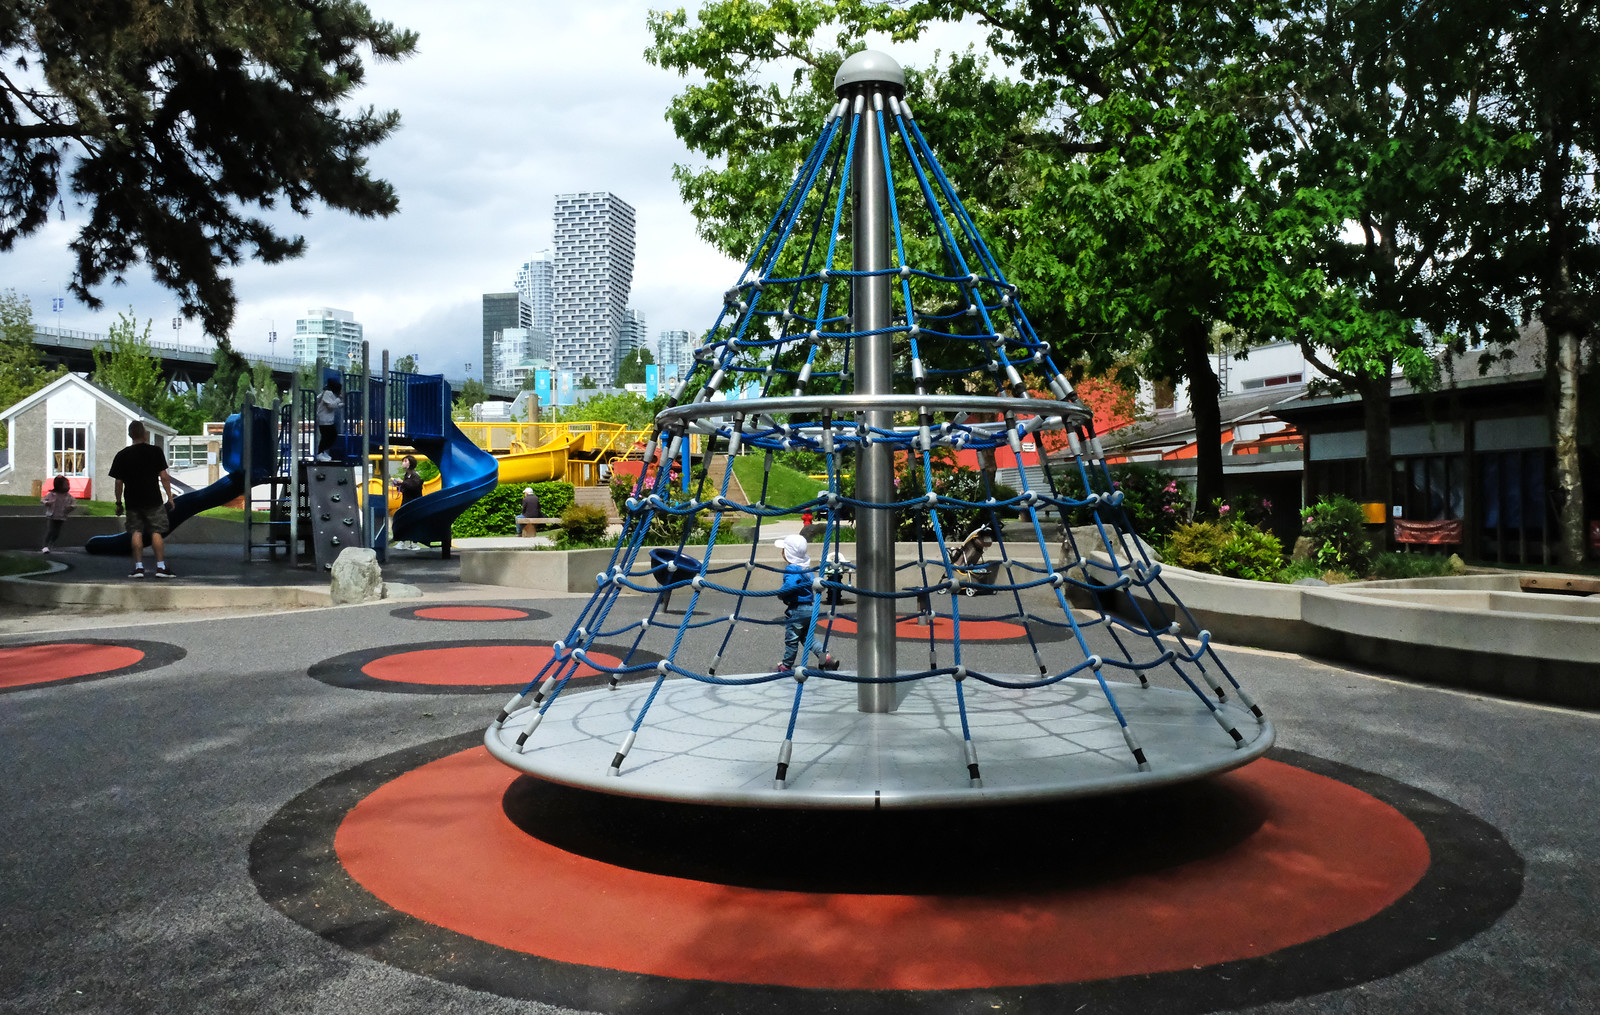 Sutcliffe Park playground, Granville Island, Vancouver, BC, Canada